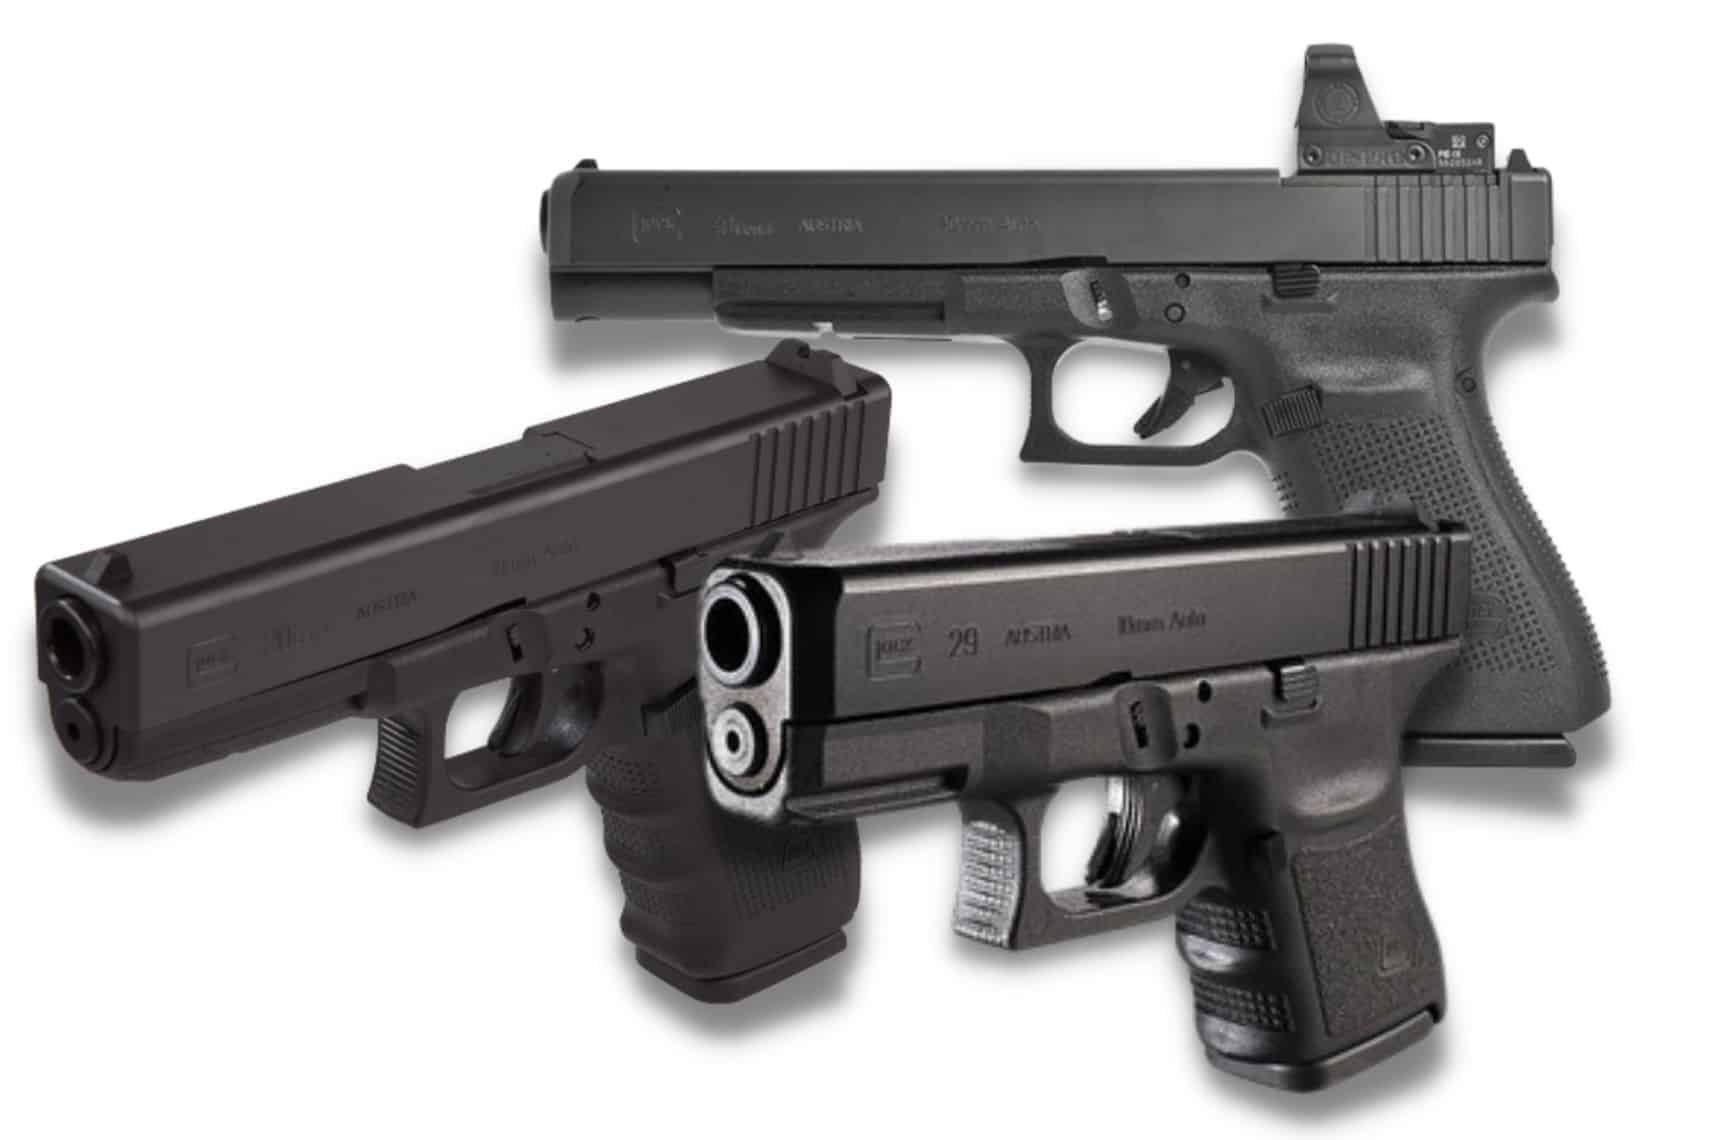 Glock 20, 29 and 40 models